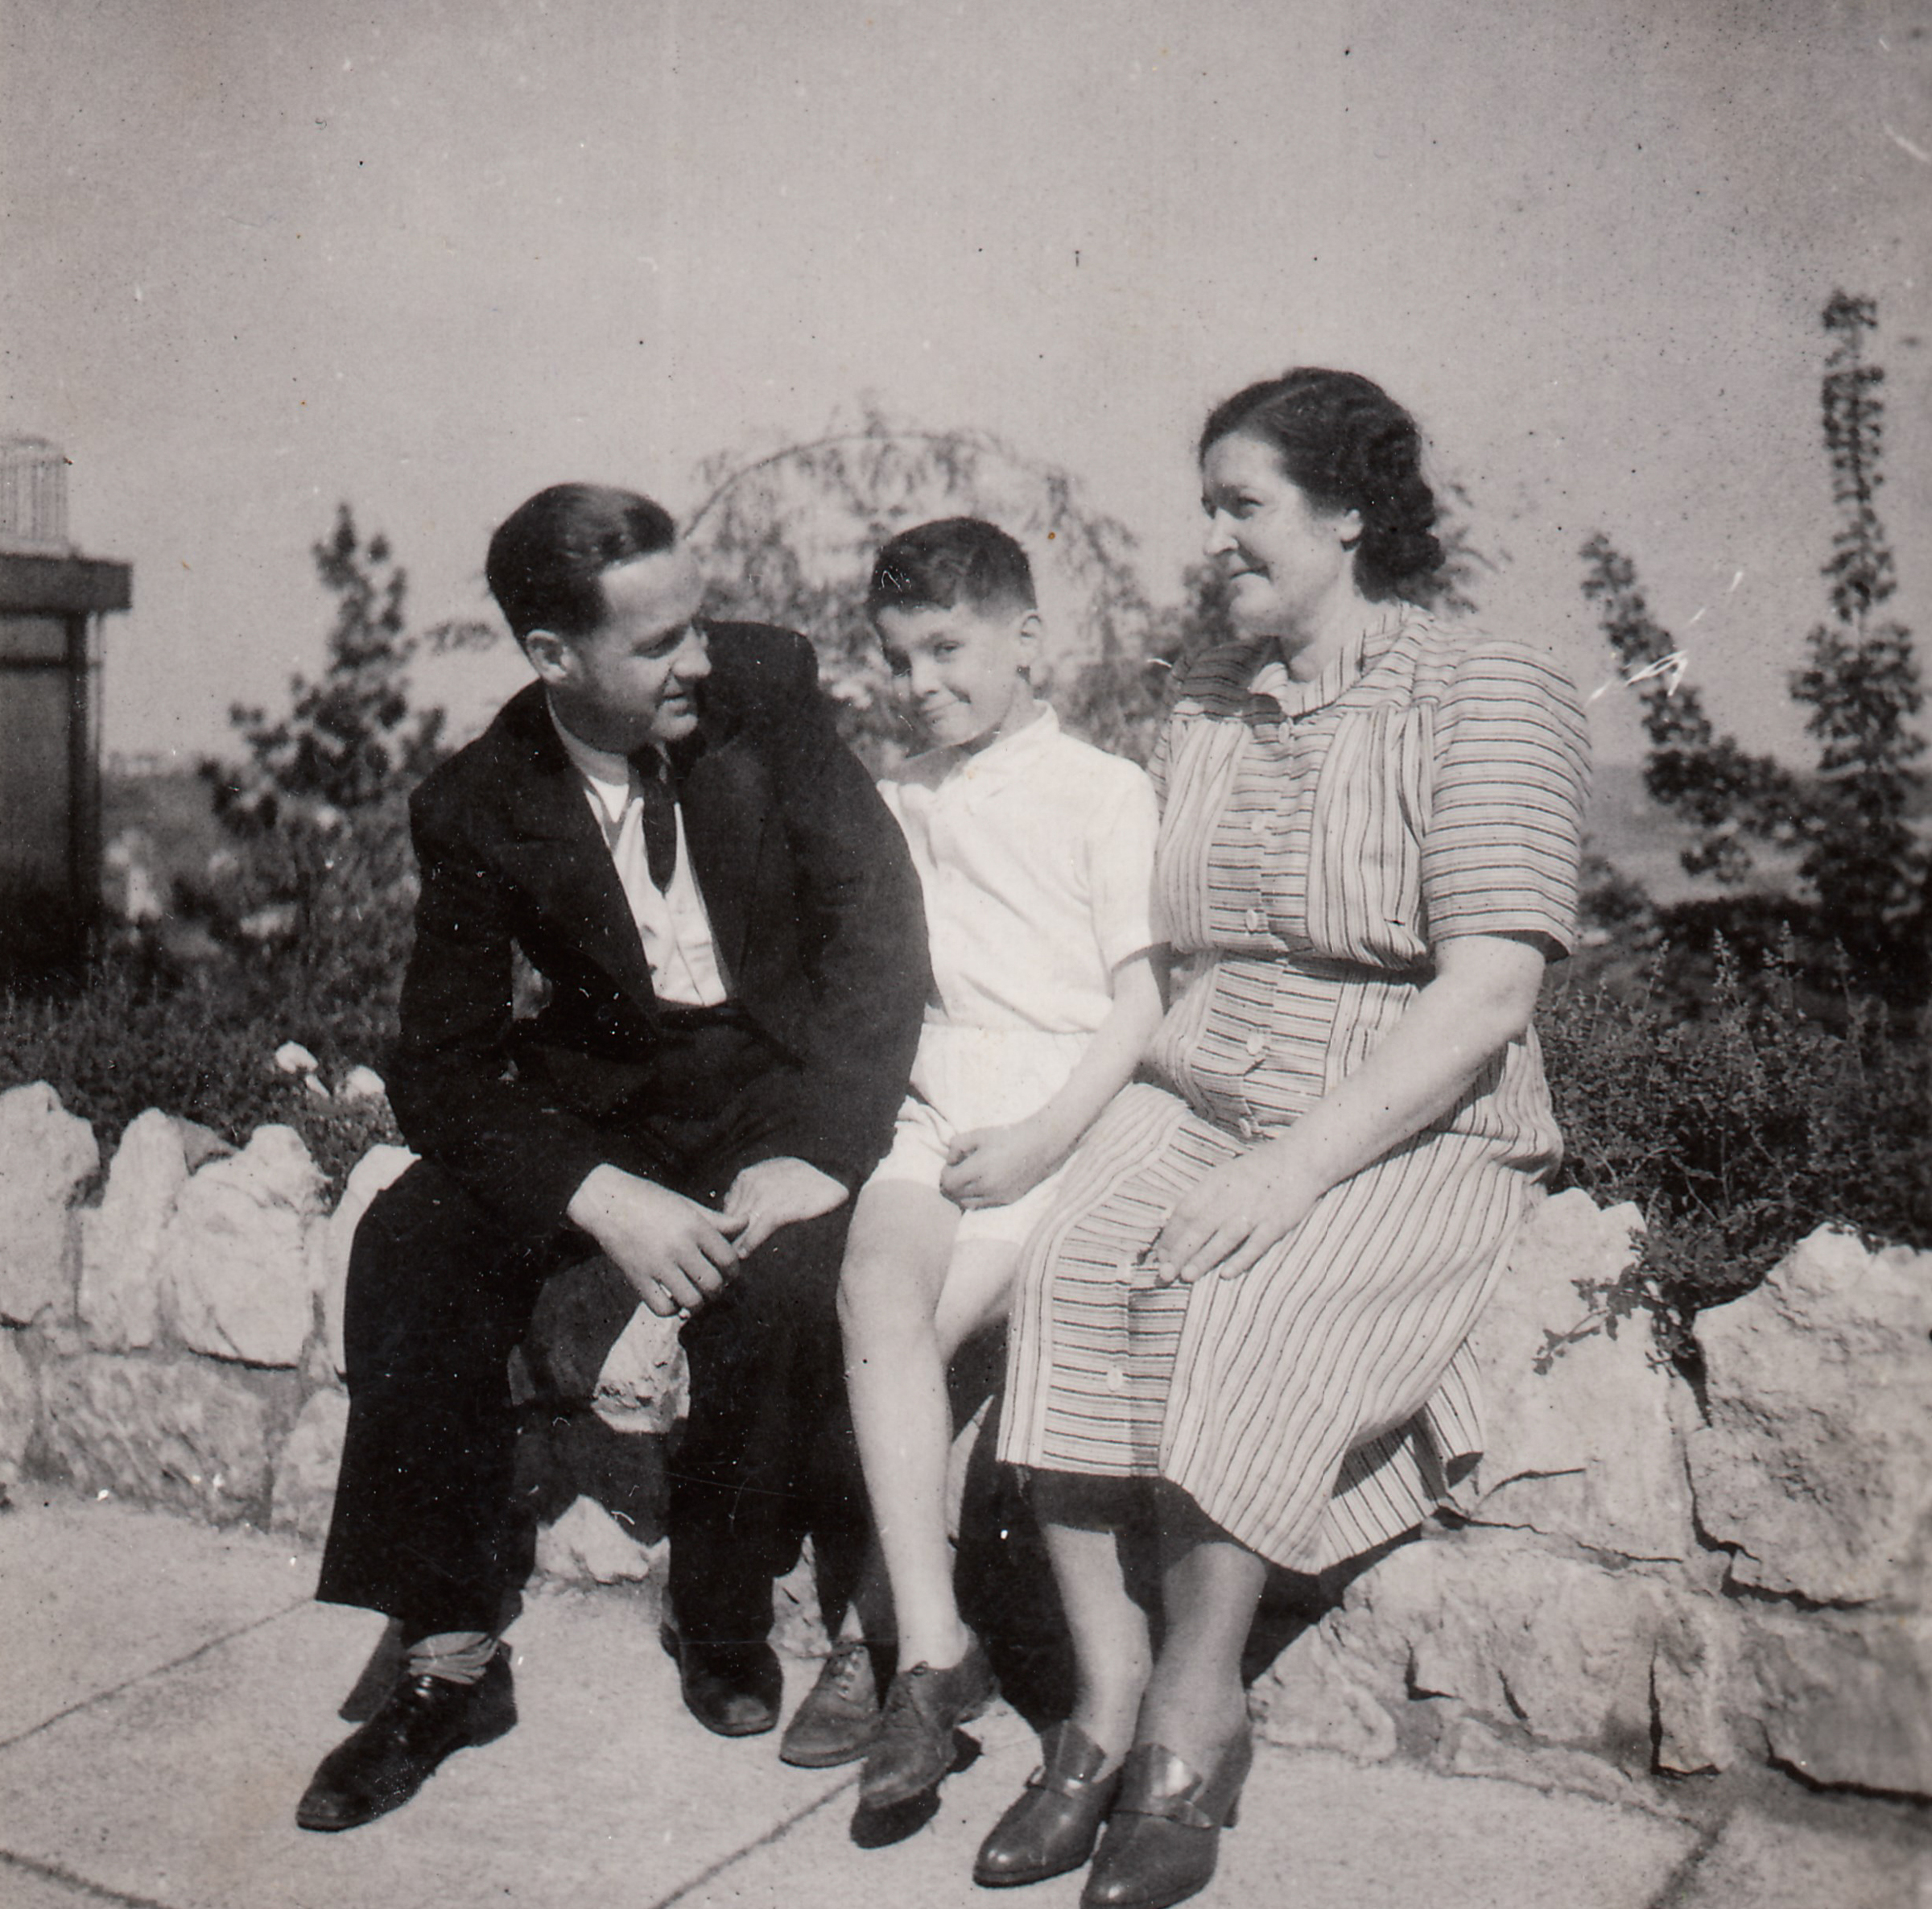 Family photograph, spring 1945